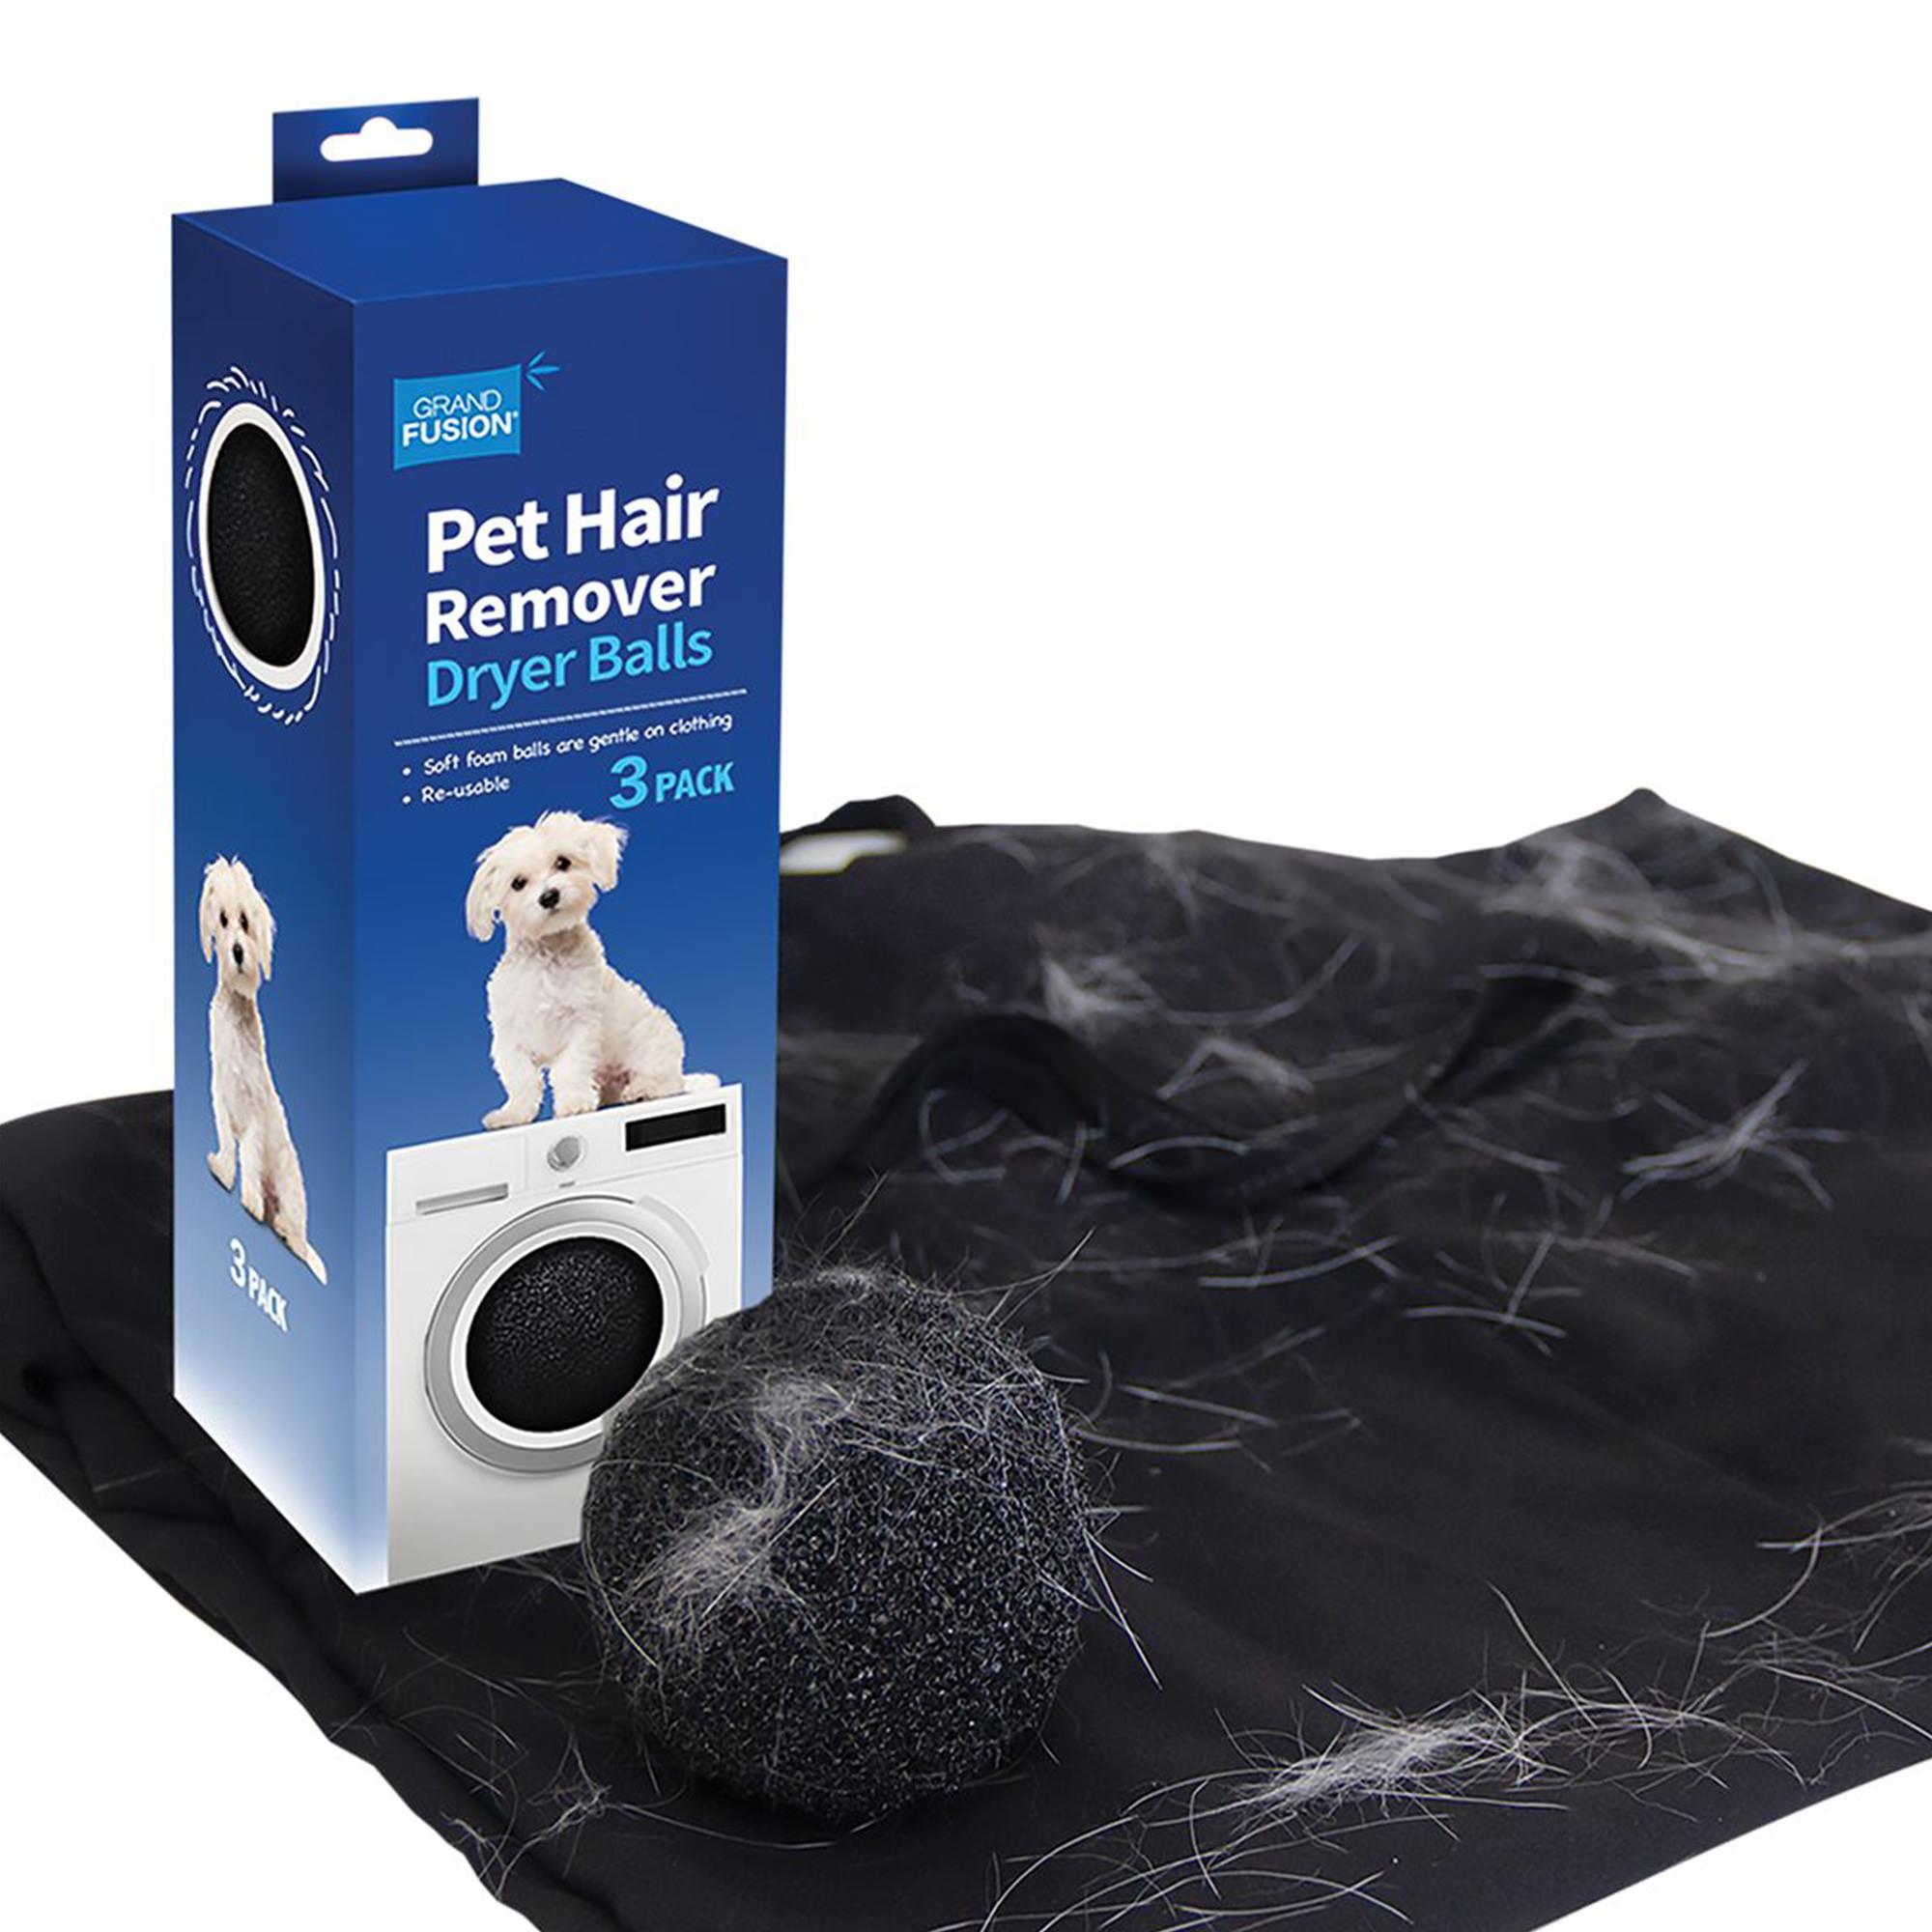 Grand Fusion Pet Hair Remover Dryer Balls 3pk Image 3